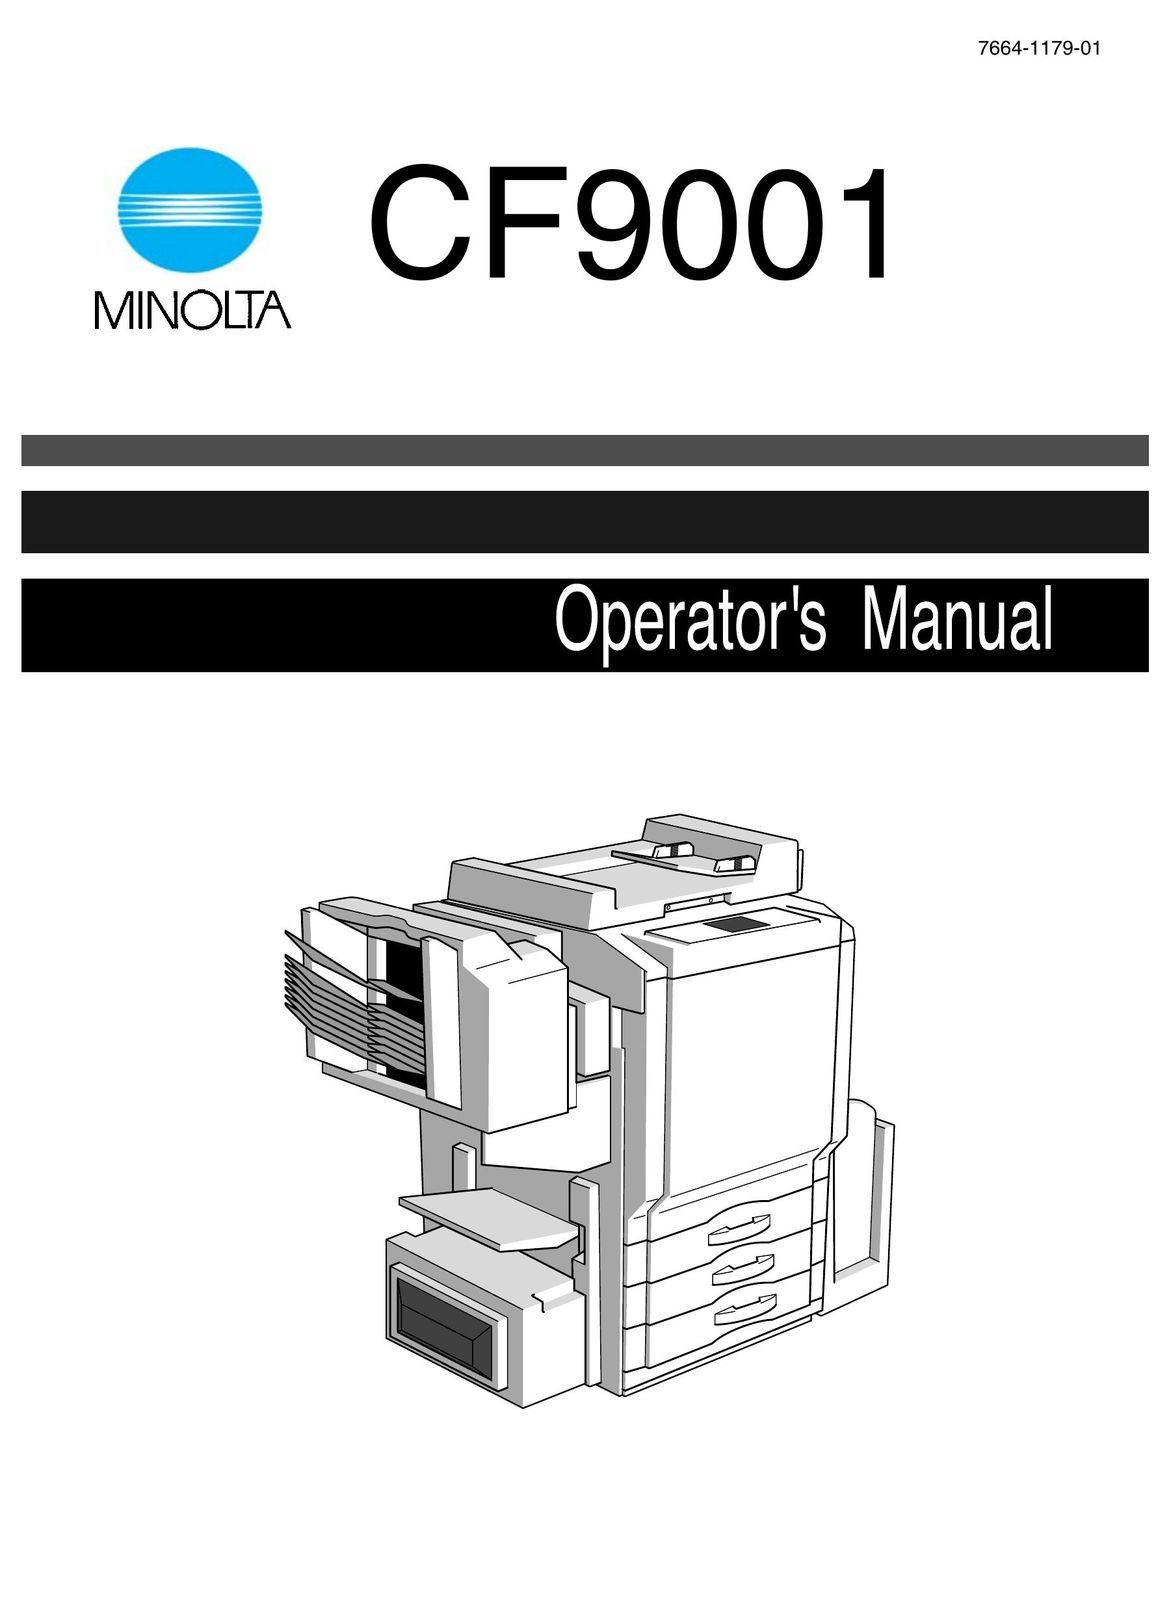 Minolta cf9001 Copier User Manual